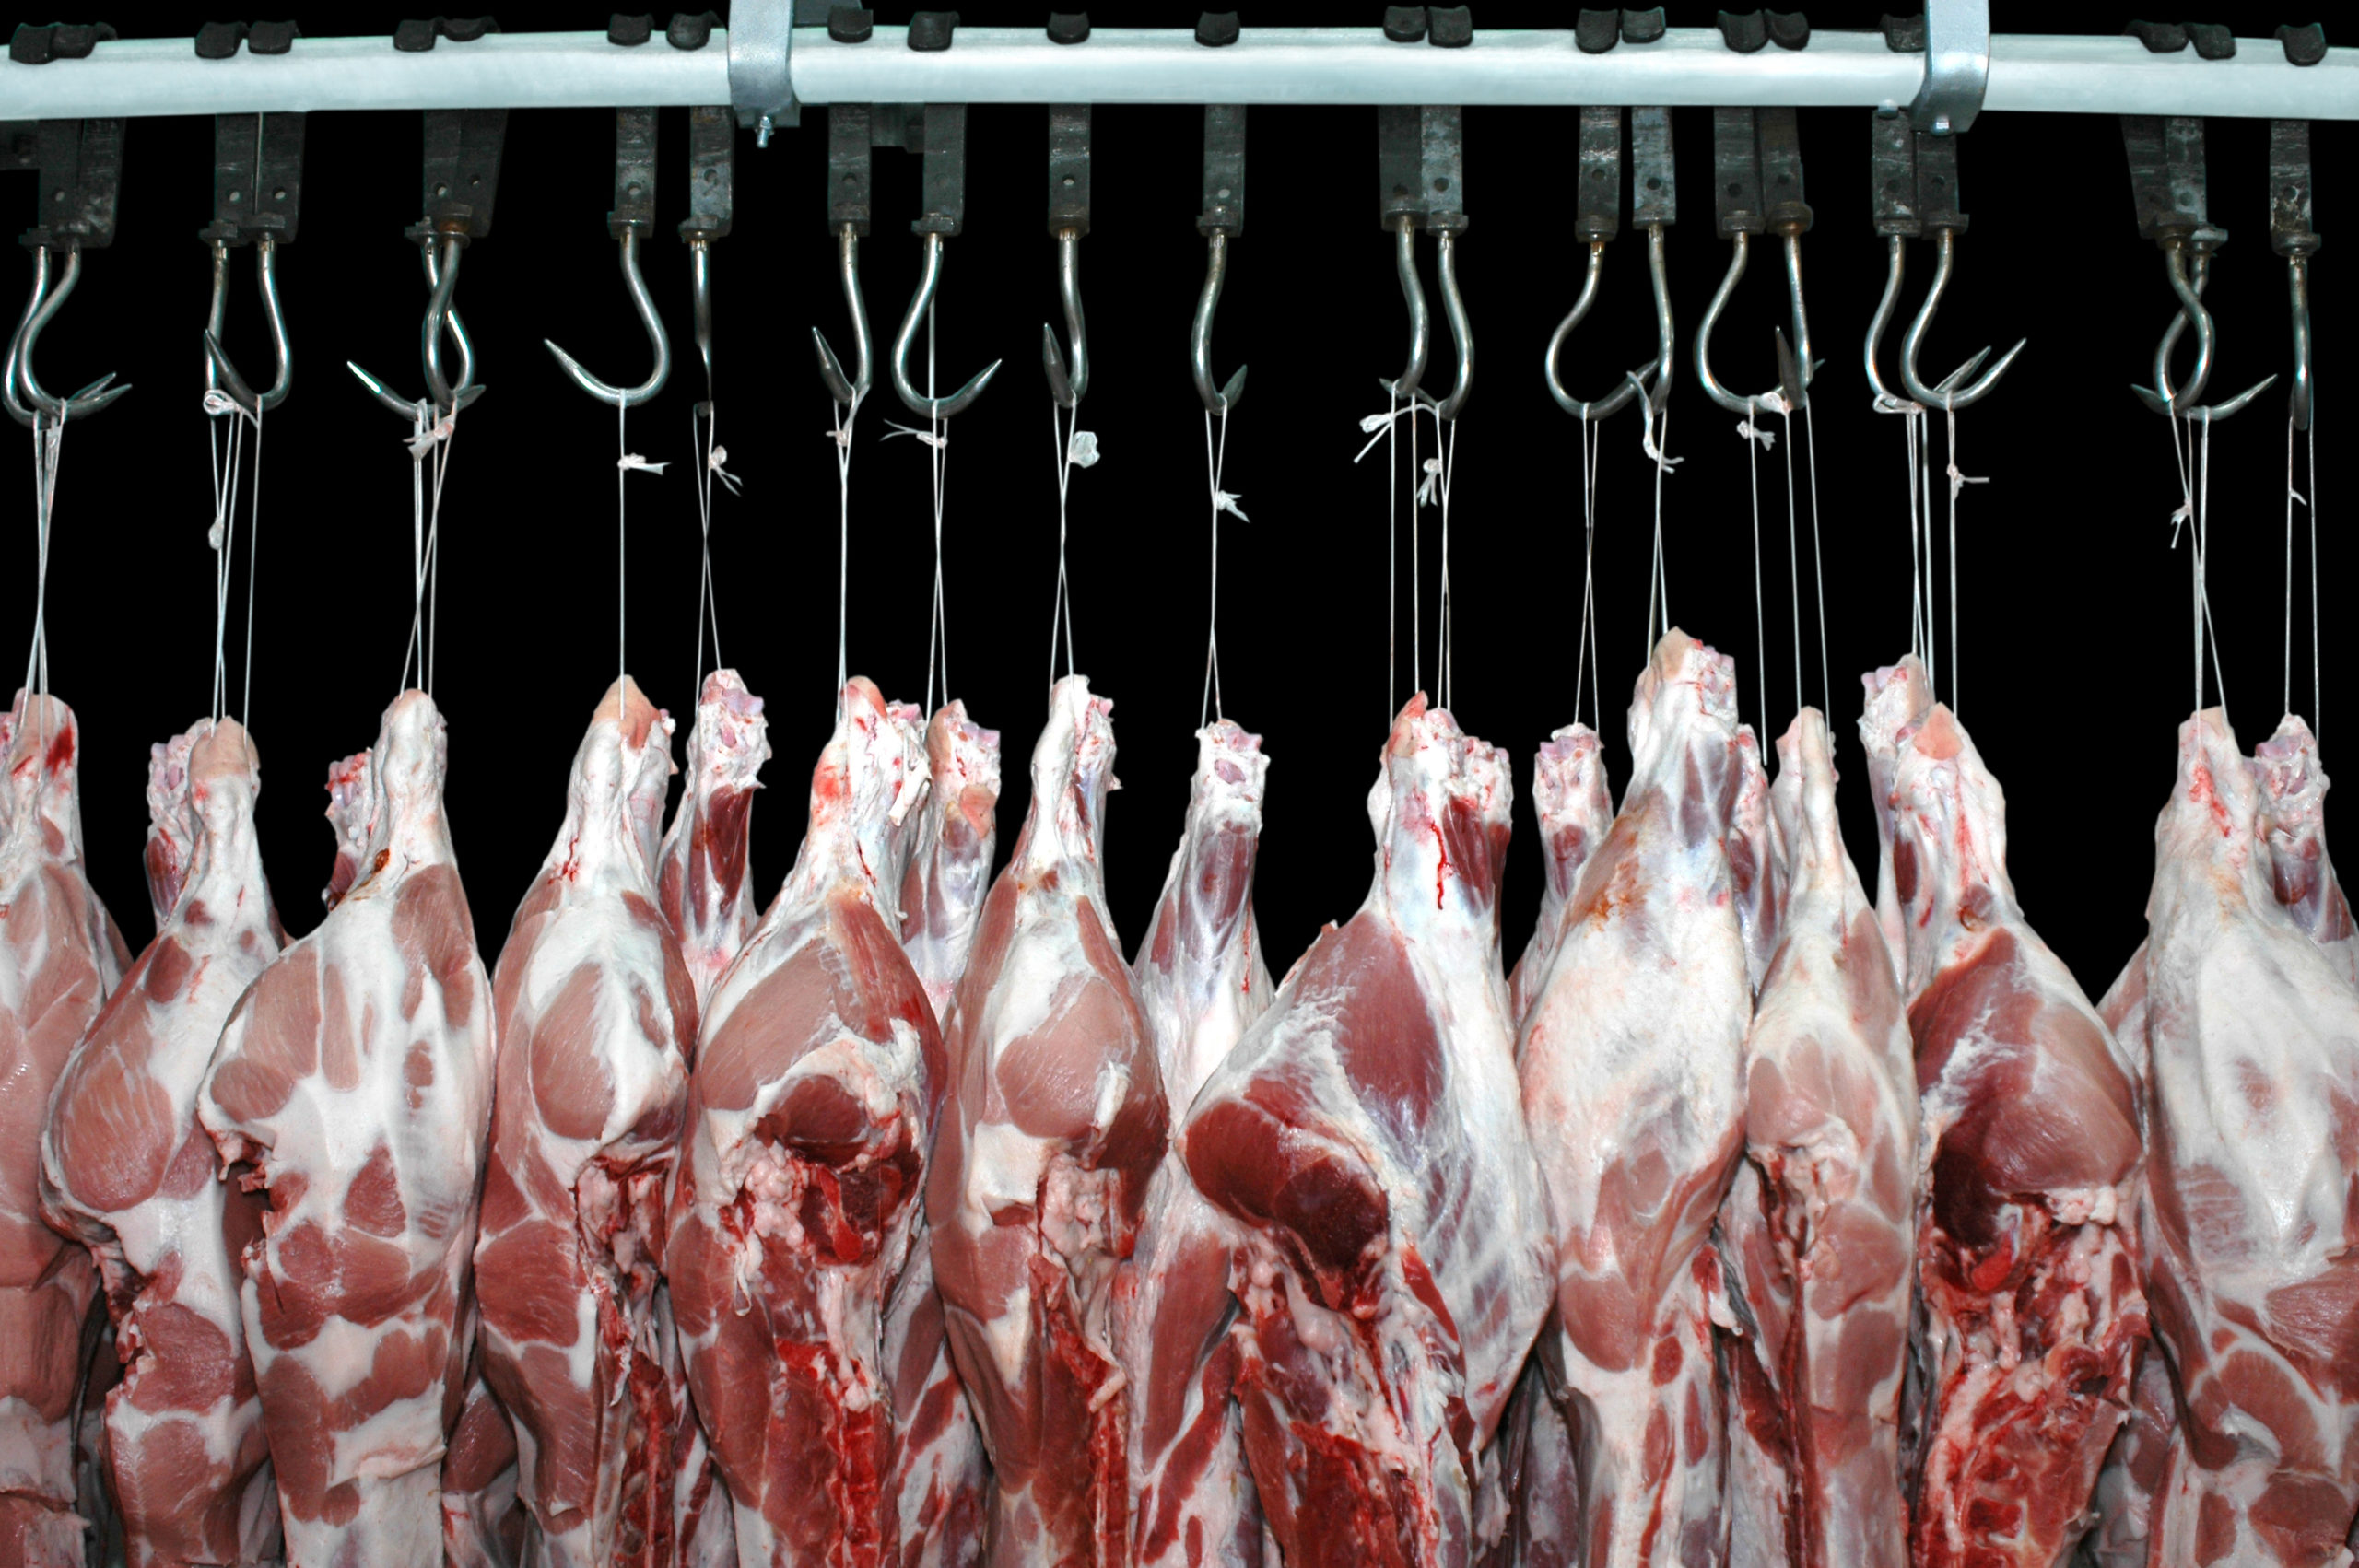 PREVOR meat industry